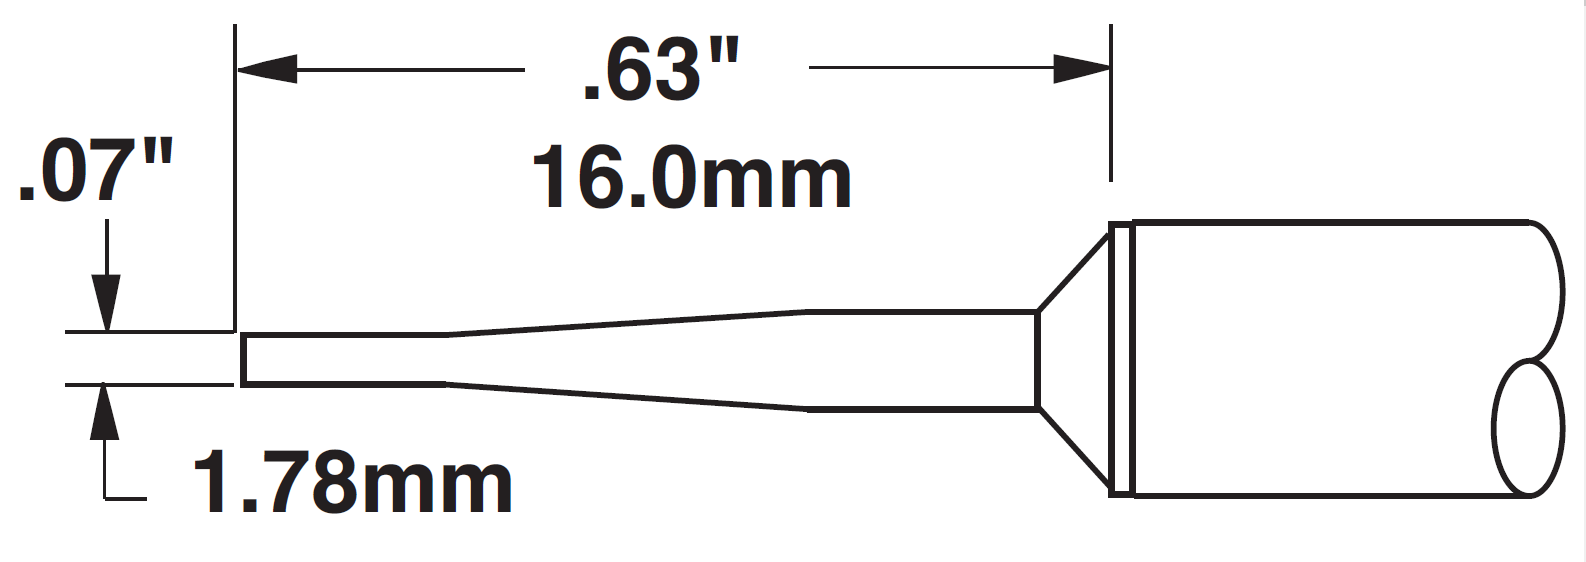 Картридж-наконечник для СV/MX, клин удлиненный 60°, 1.78х16.0мм (замена STTC-142)